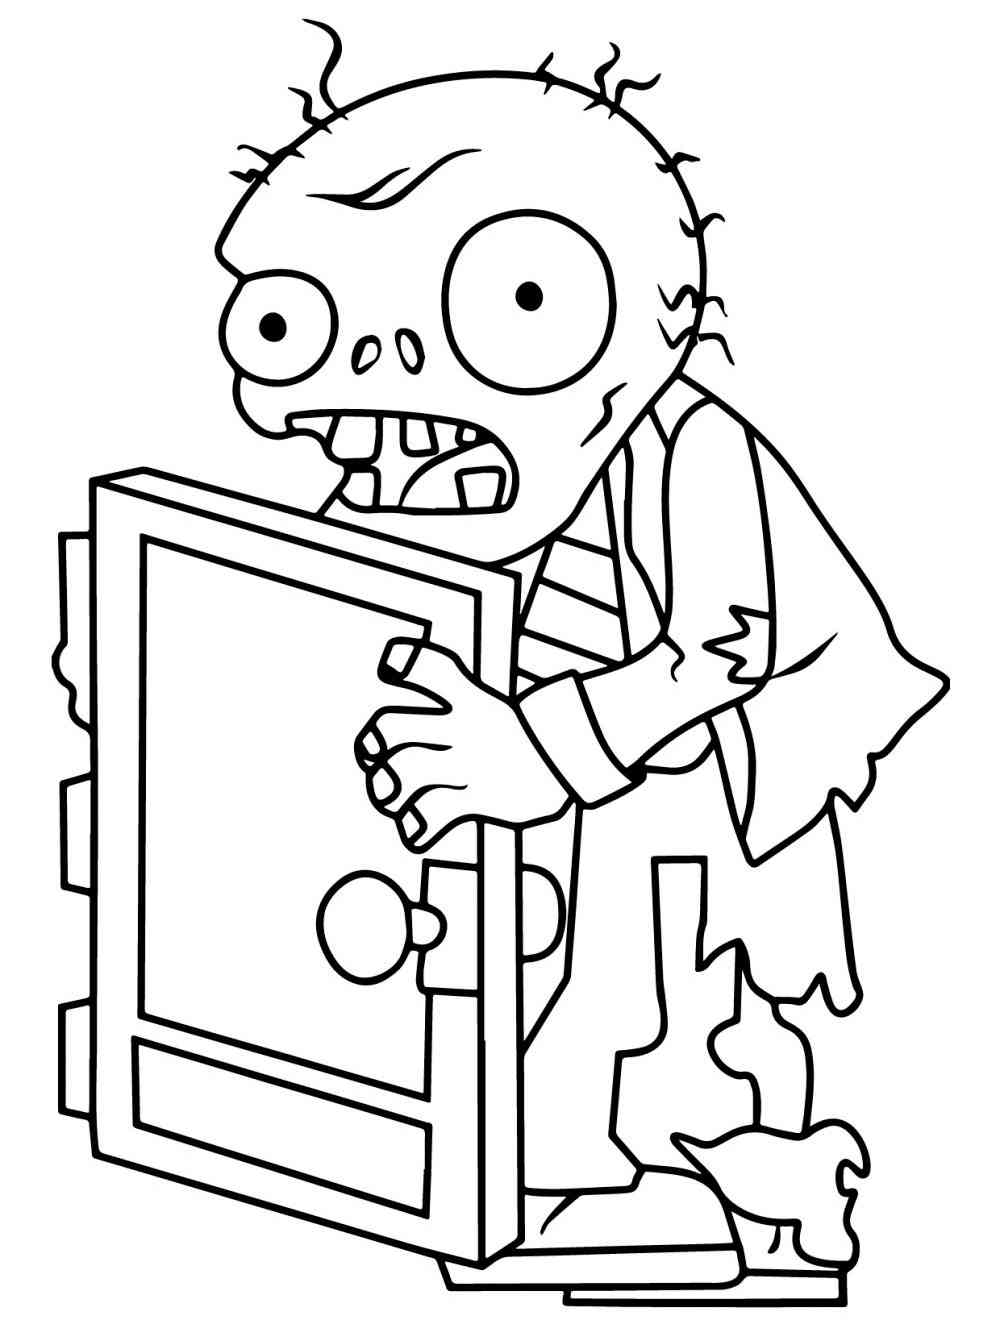 Screen Door Zombie from PvZ coloring page